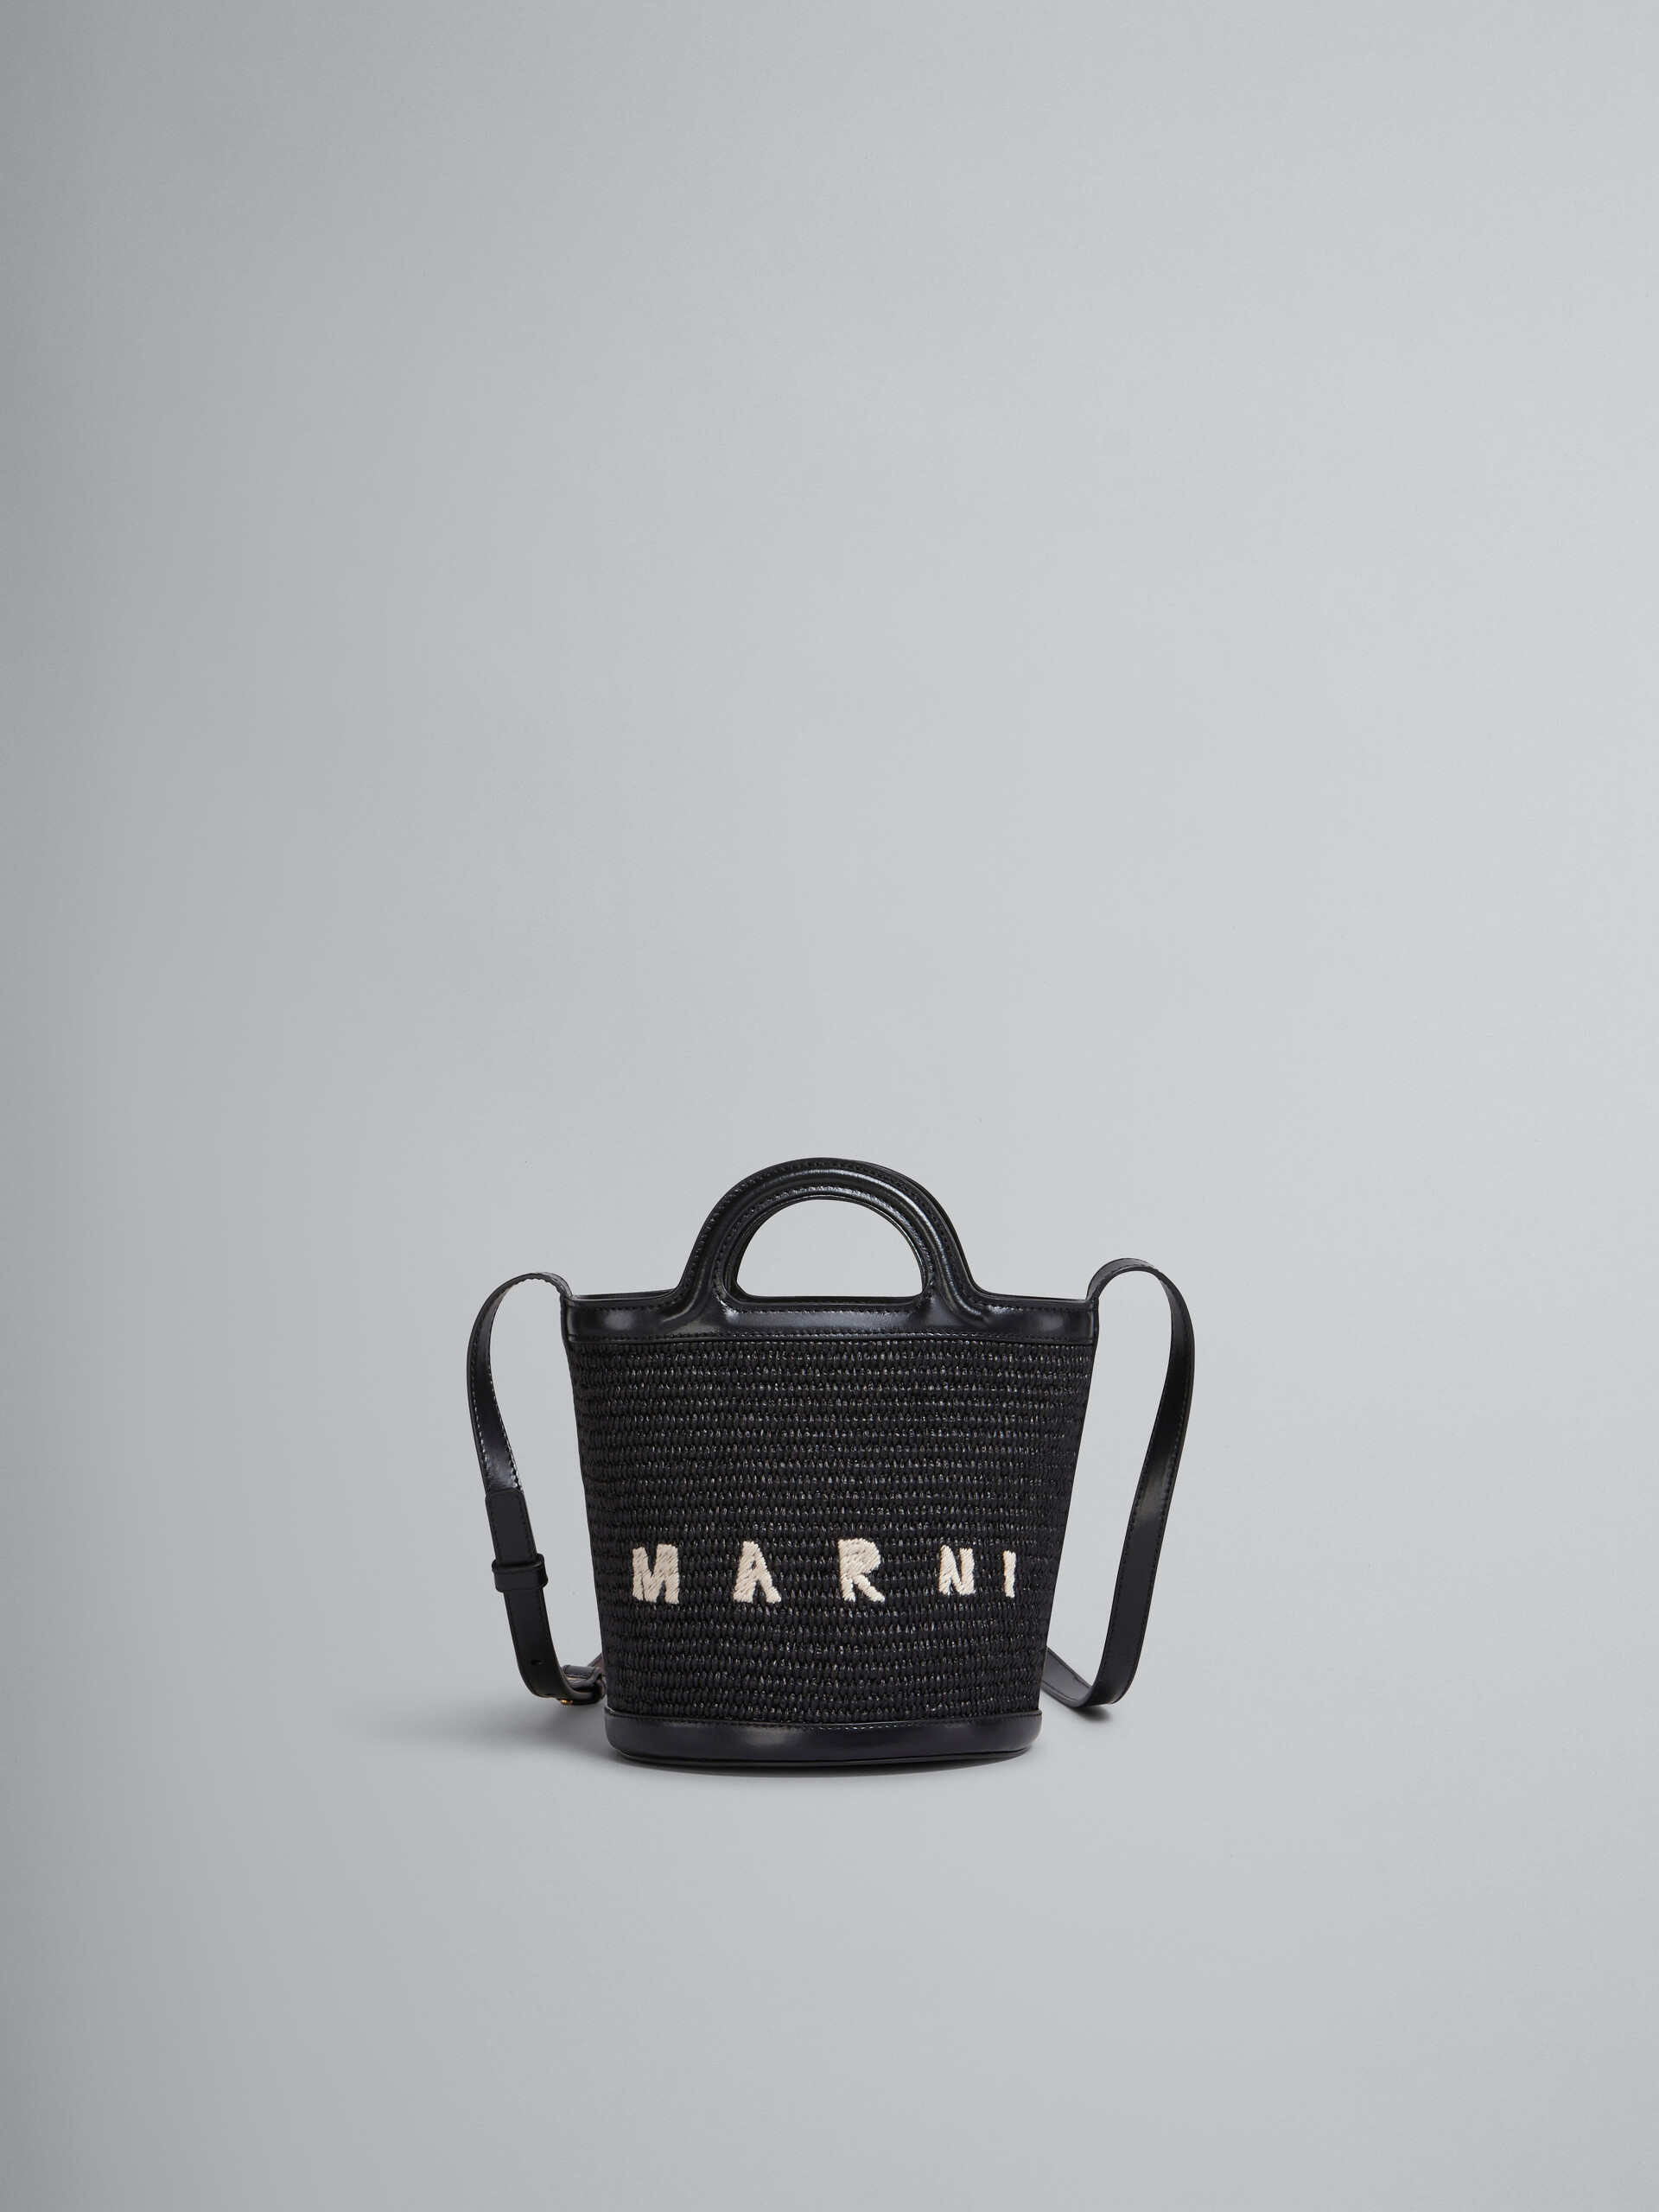 Tropicalia Small Bucket Bag in black leather and raffia - Shoulder Bag - Image 1